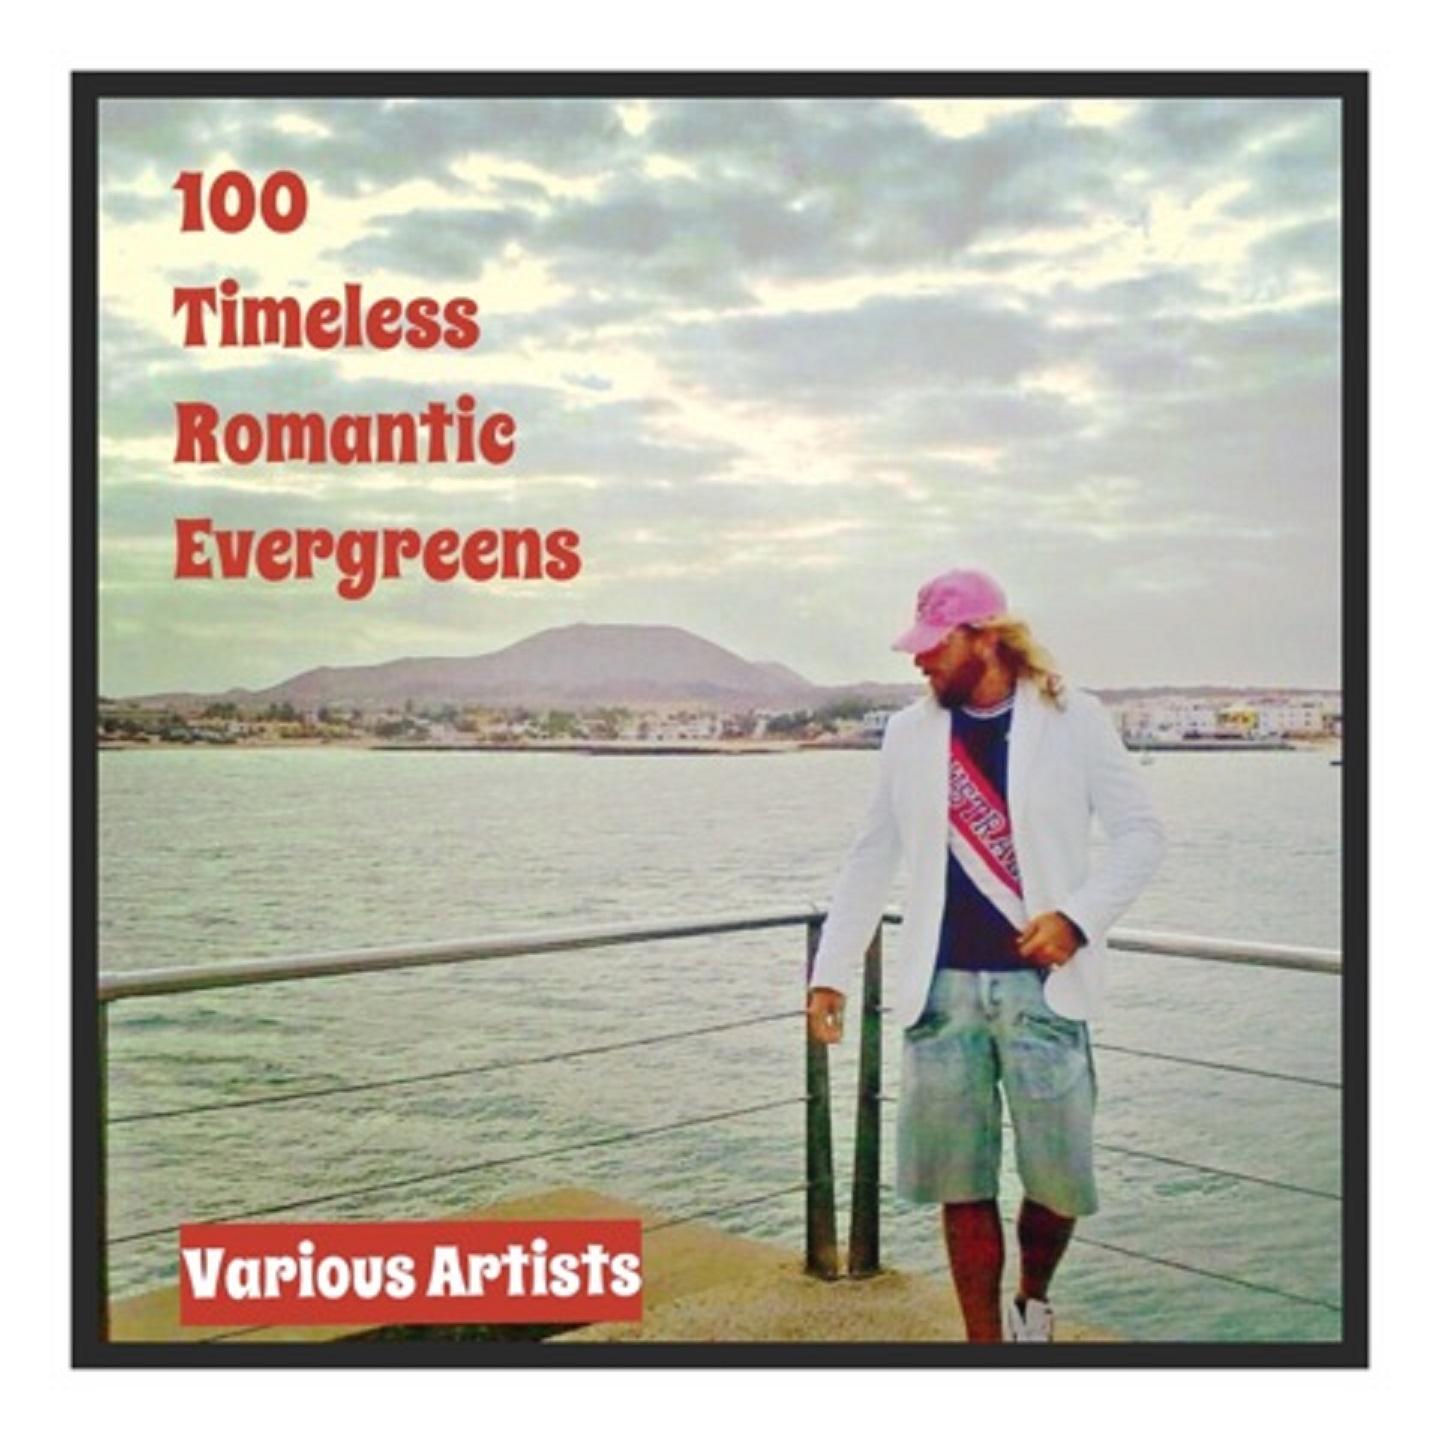 100 Timeless Romantic Evergreens